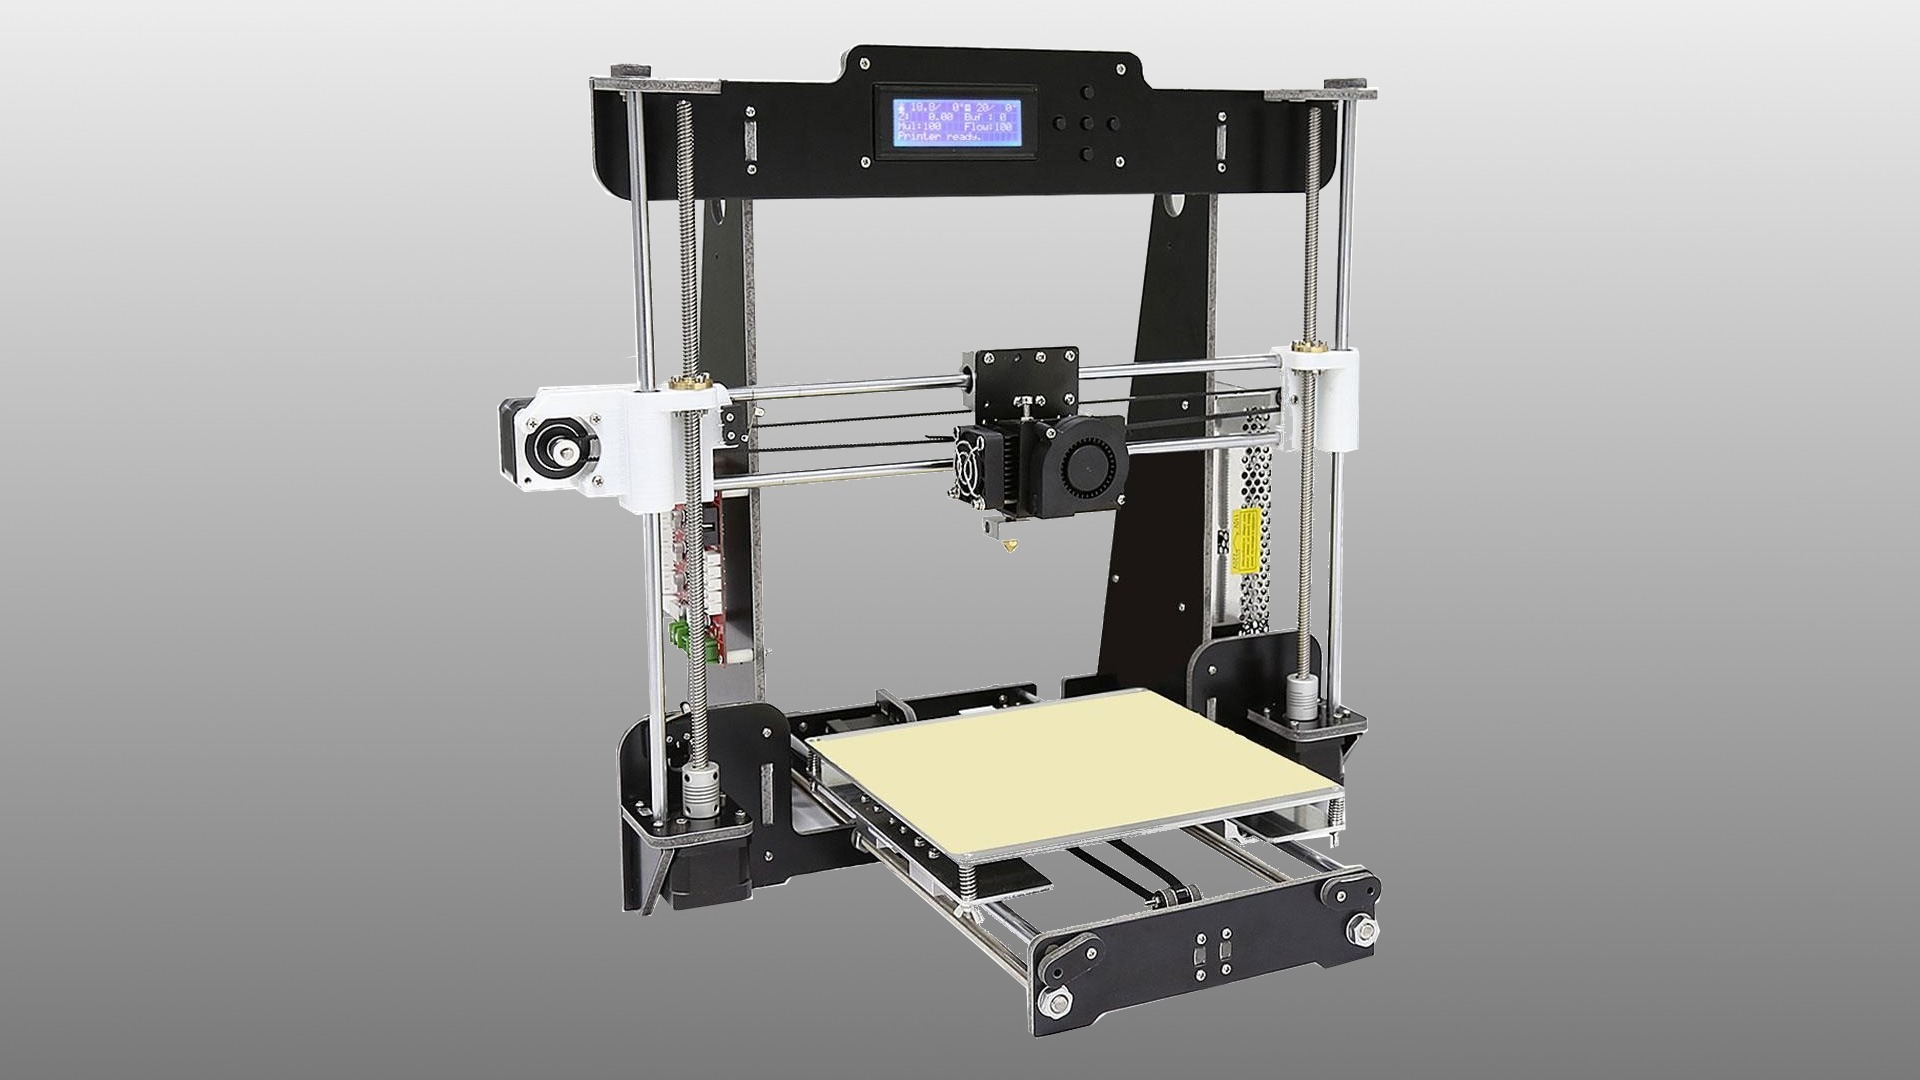 Anet A8 3D Printer - Utility $200 | Maker Freedom